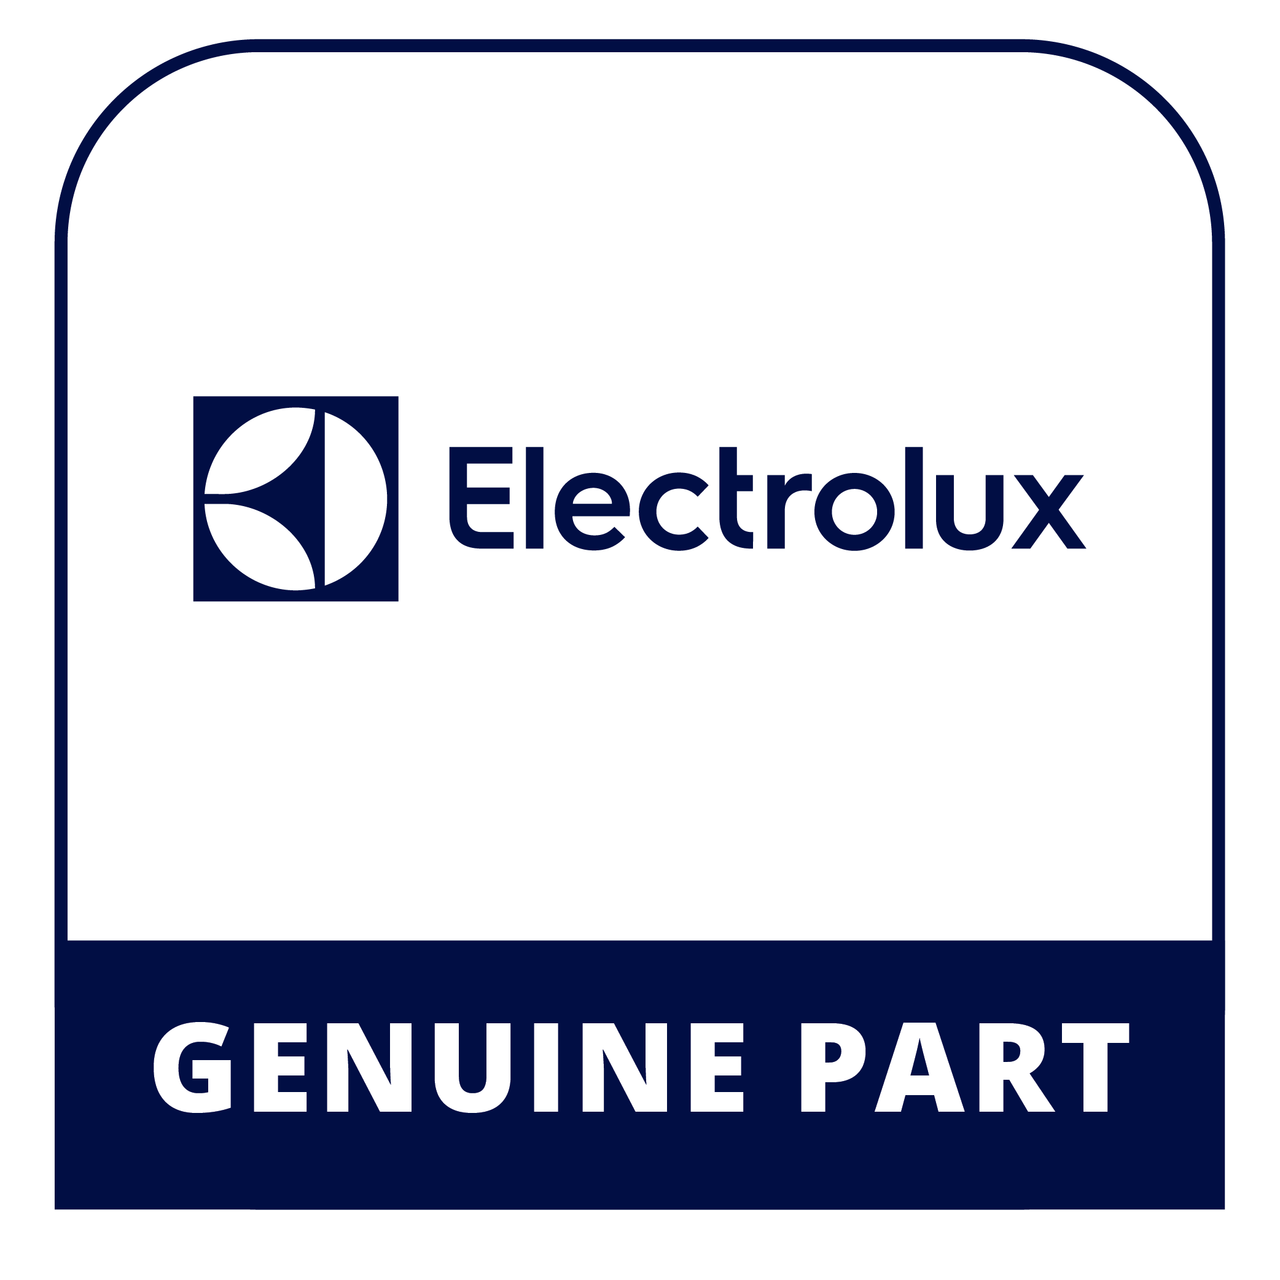 Frigidaire - Electrolux 5303323481 - Support-Door Rack - Genuine Electrolux Part